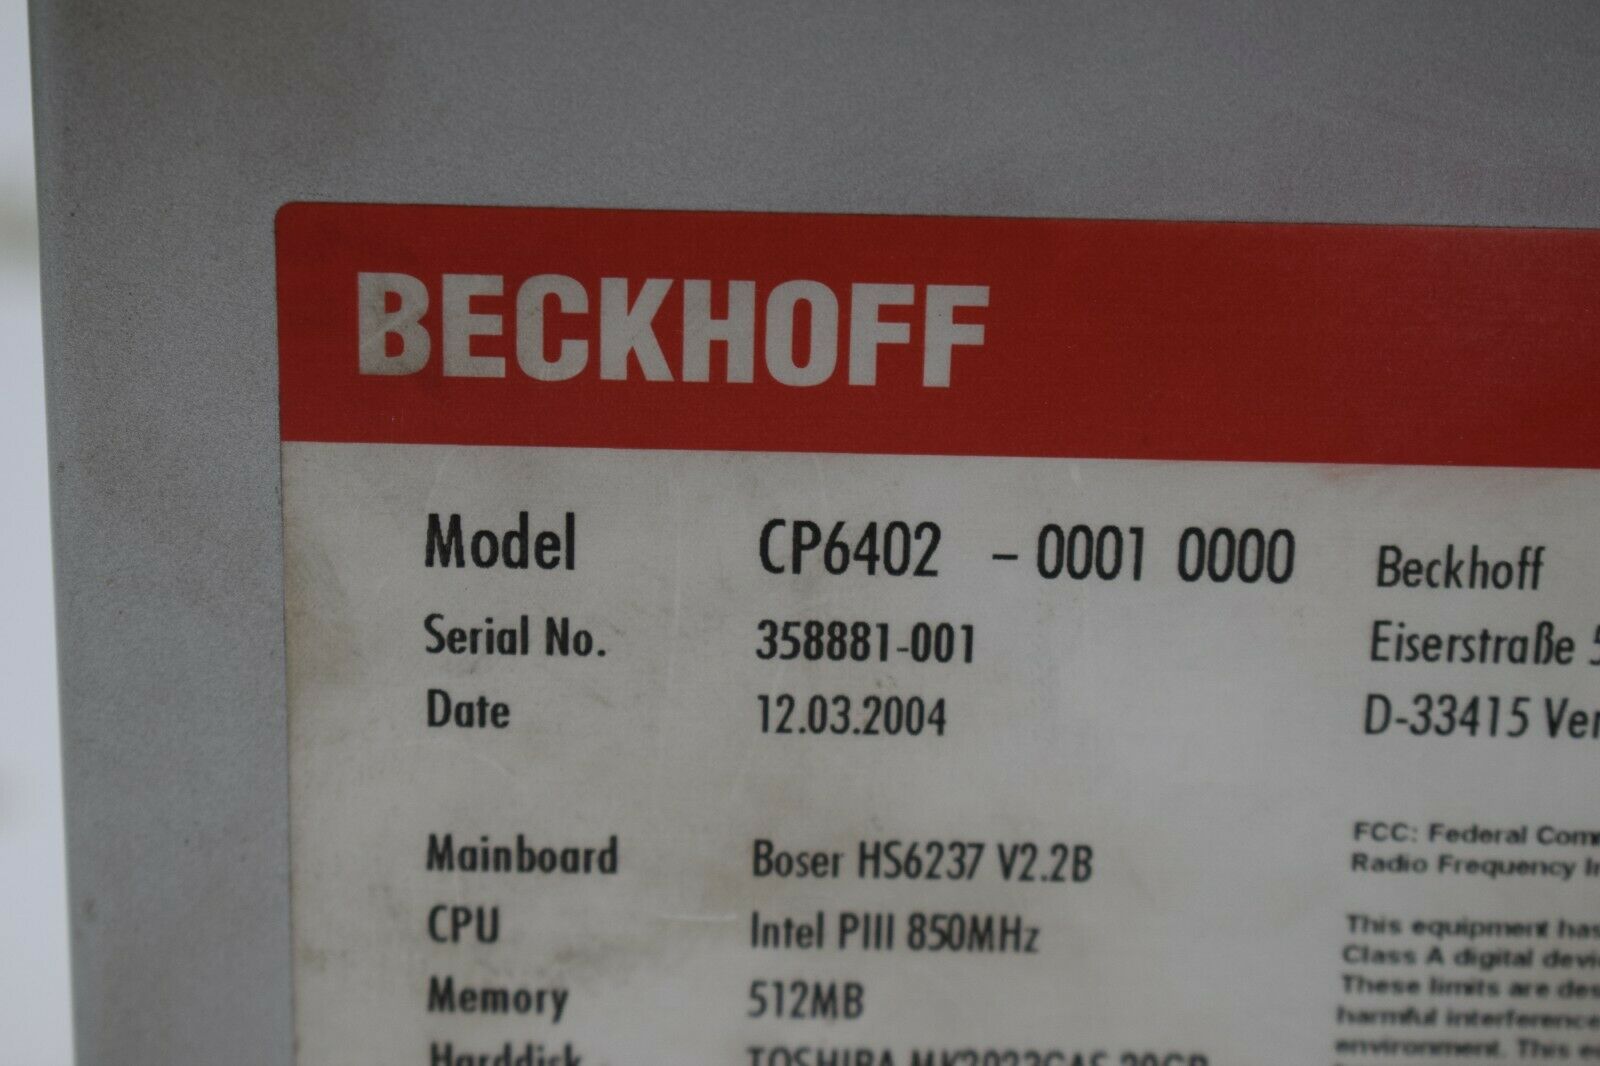 Beckhoff Panel CP6402-0001 0000